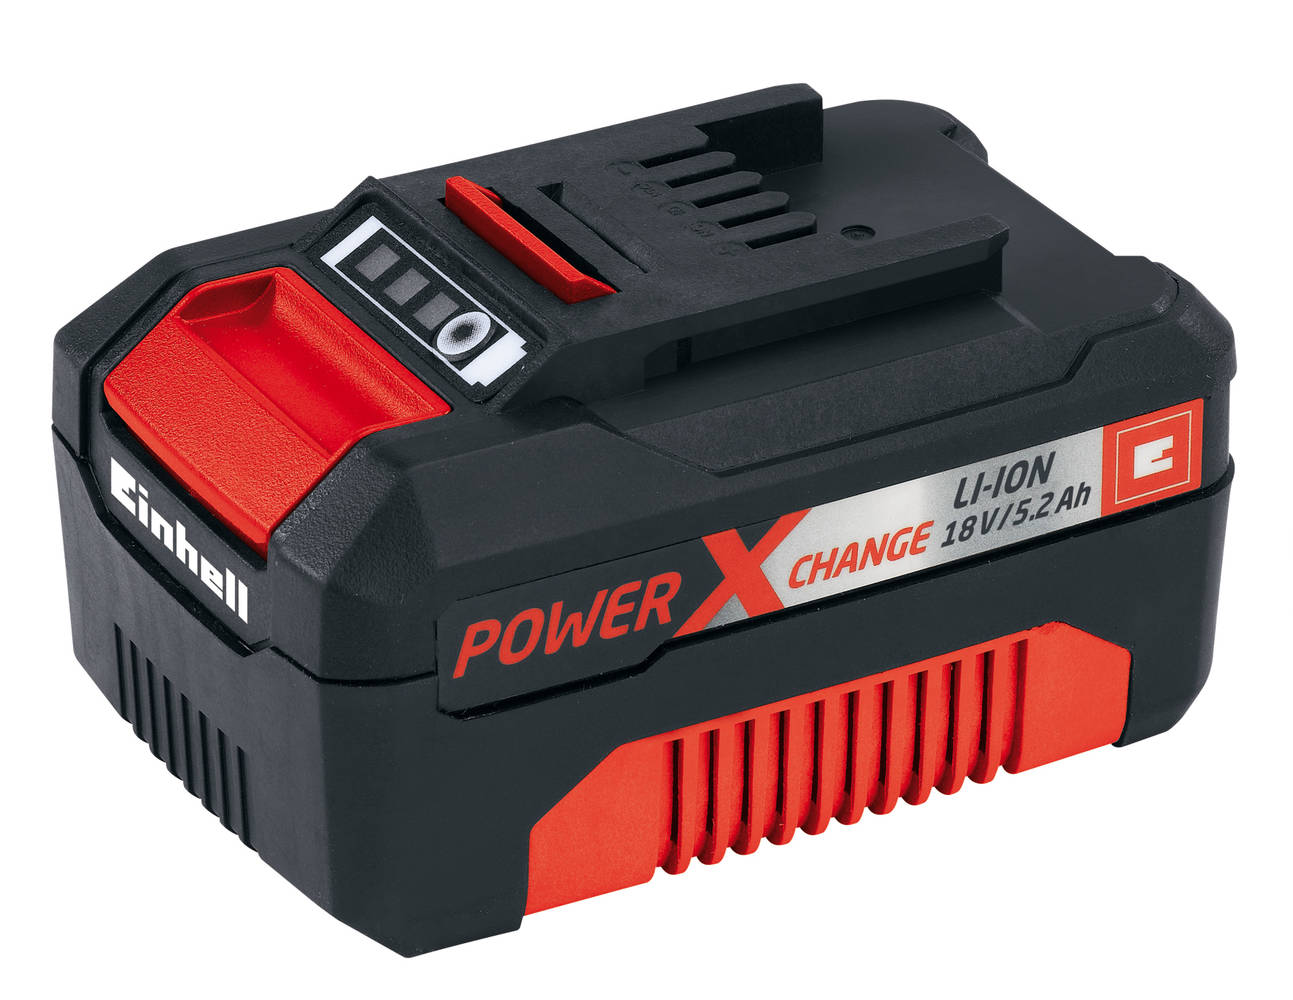 Power-X-Change Starter-Kit 1,5 Ah